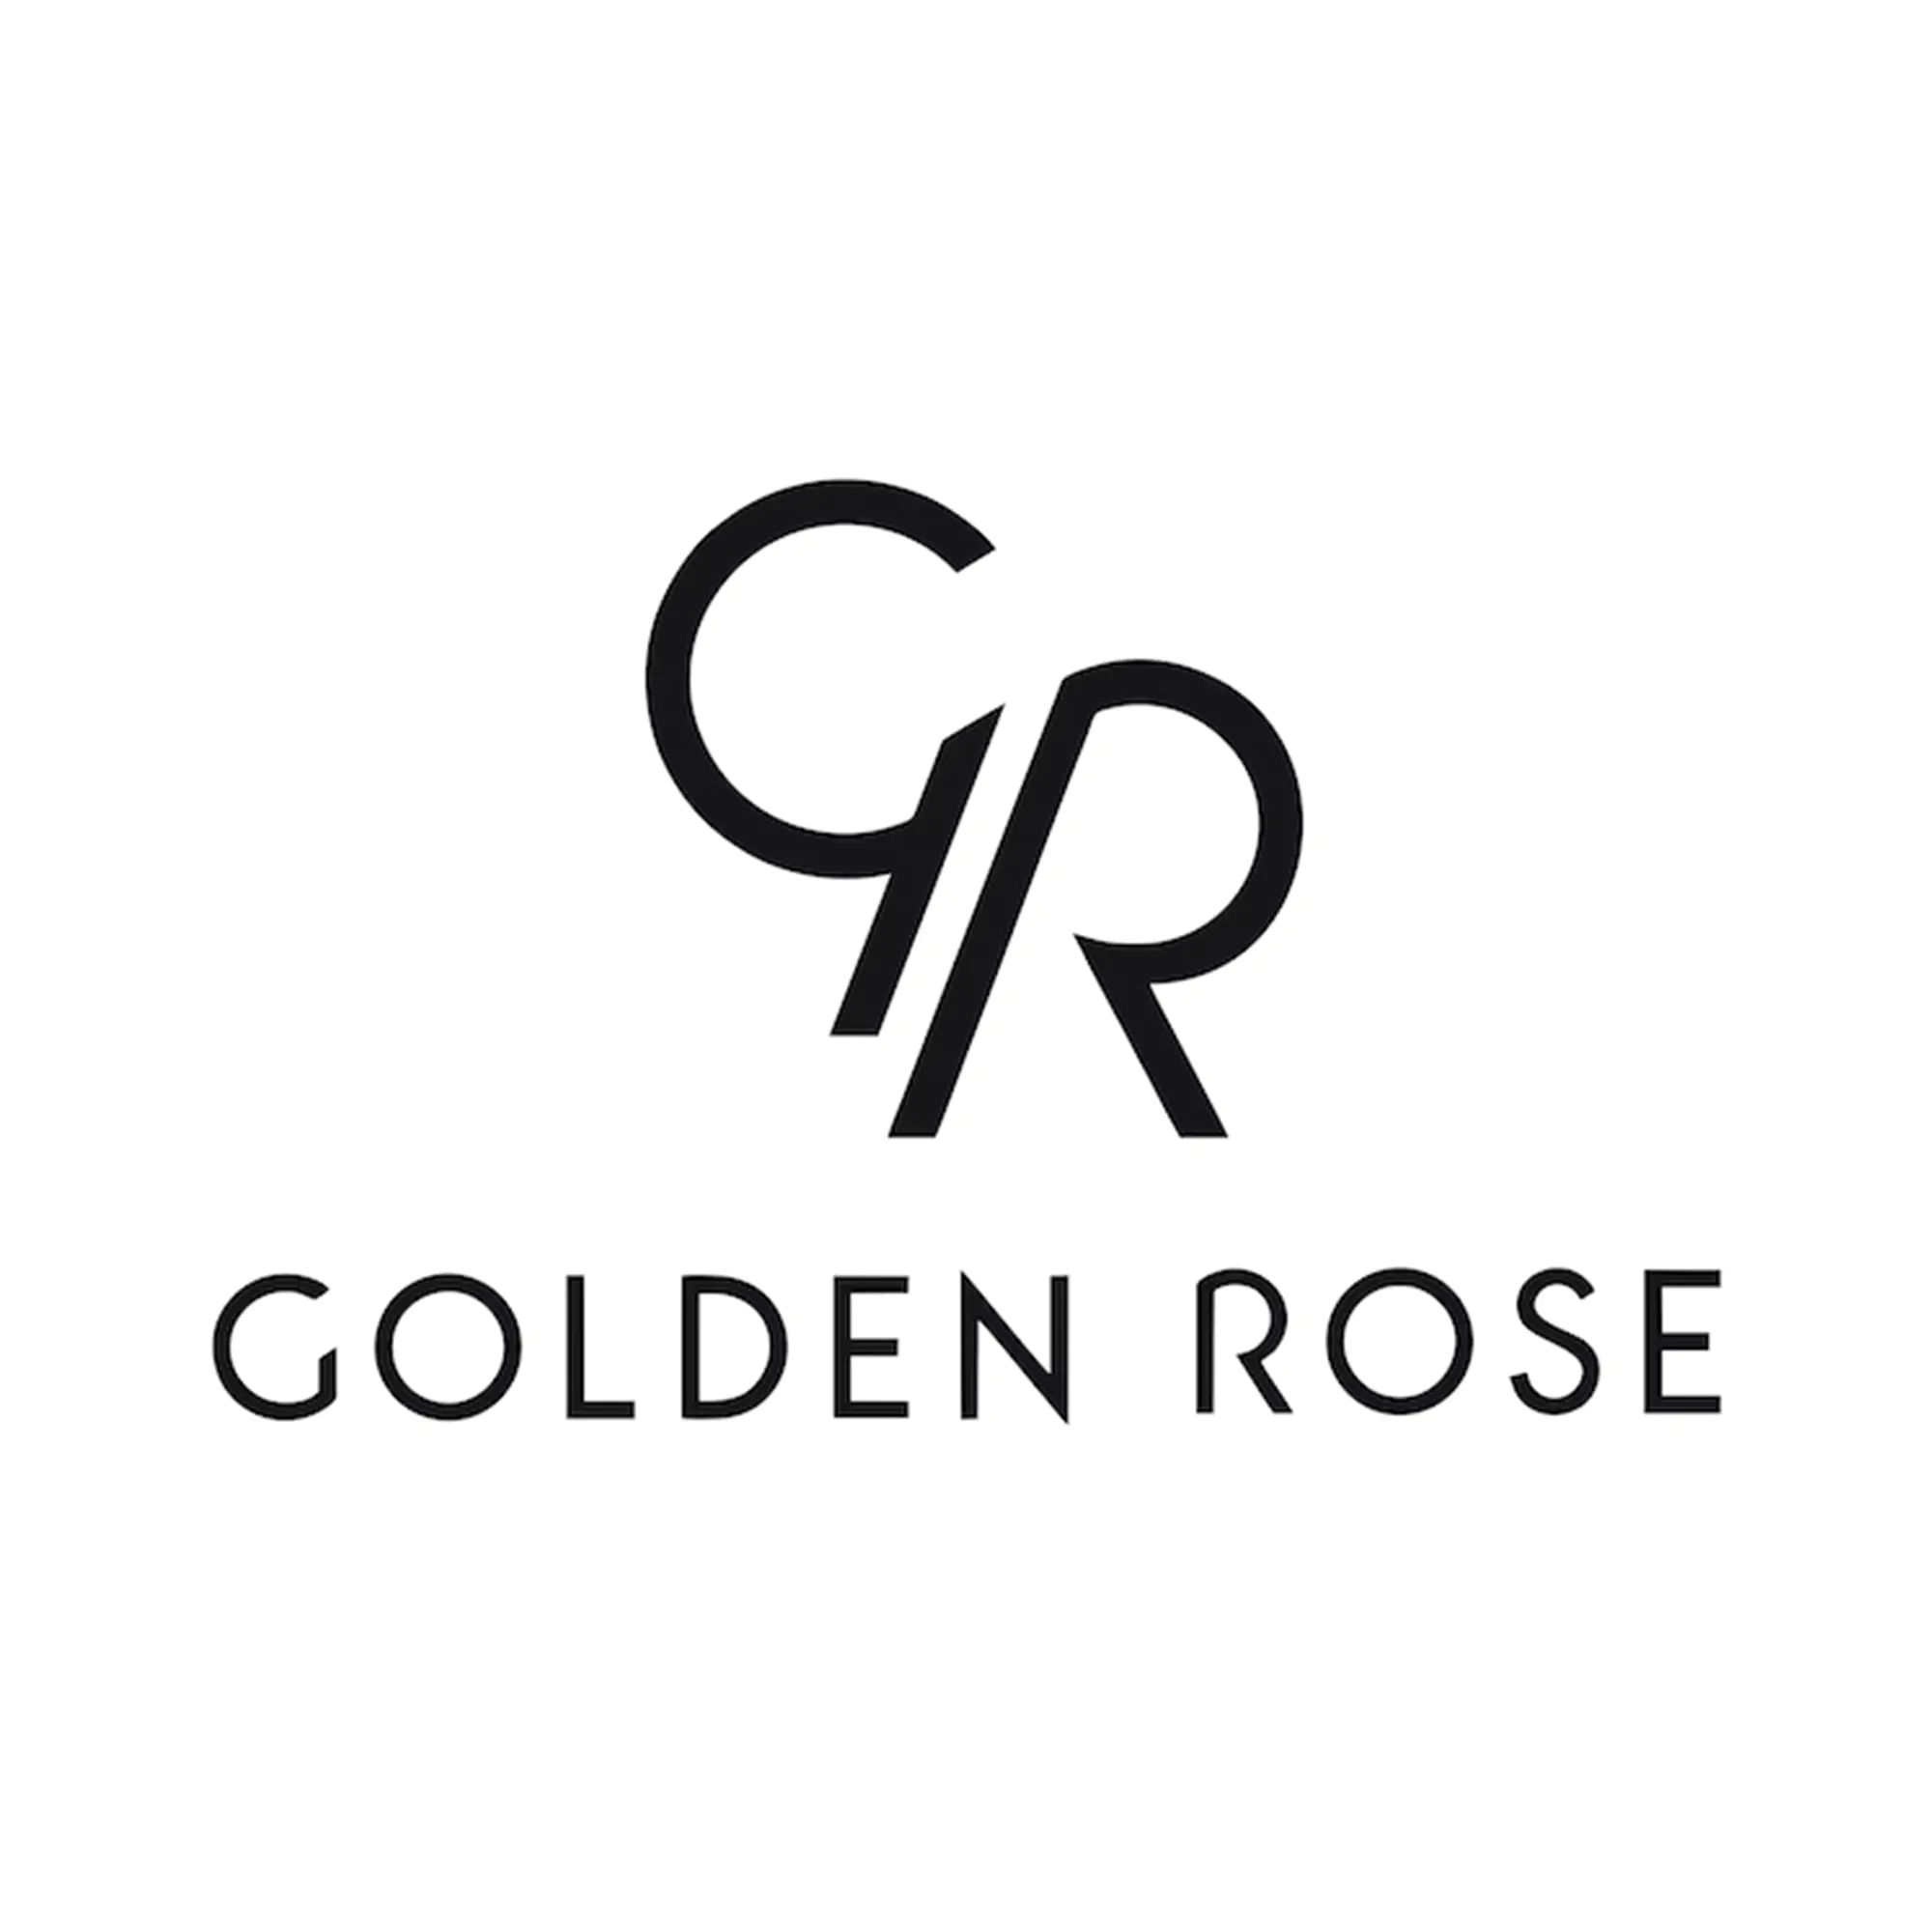 Golden Rose Satin Smoothing Fluid Foundation - Femme Fatale - Femme Fatale - Golden Rose